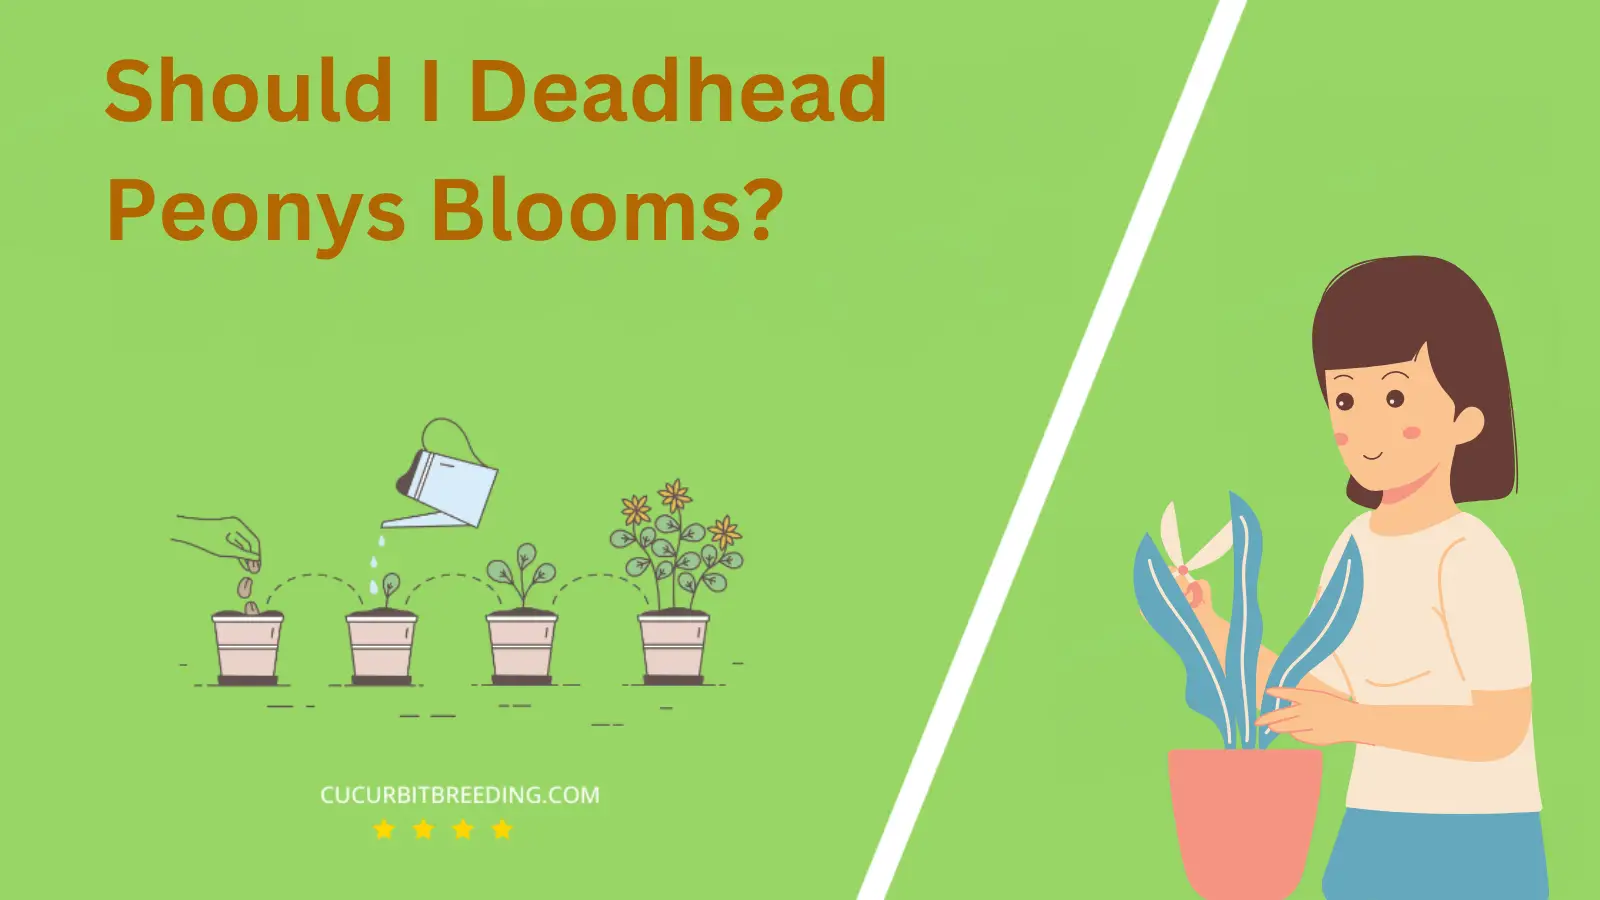 Should I Deadhead Peonys Blooms?